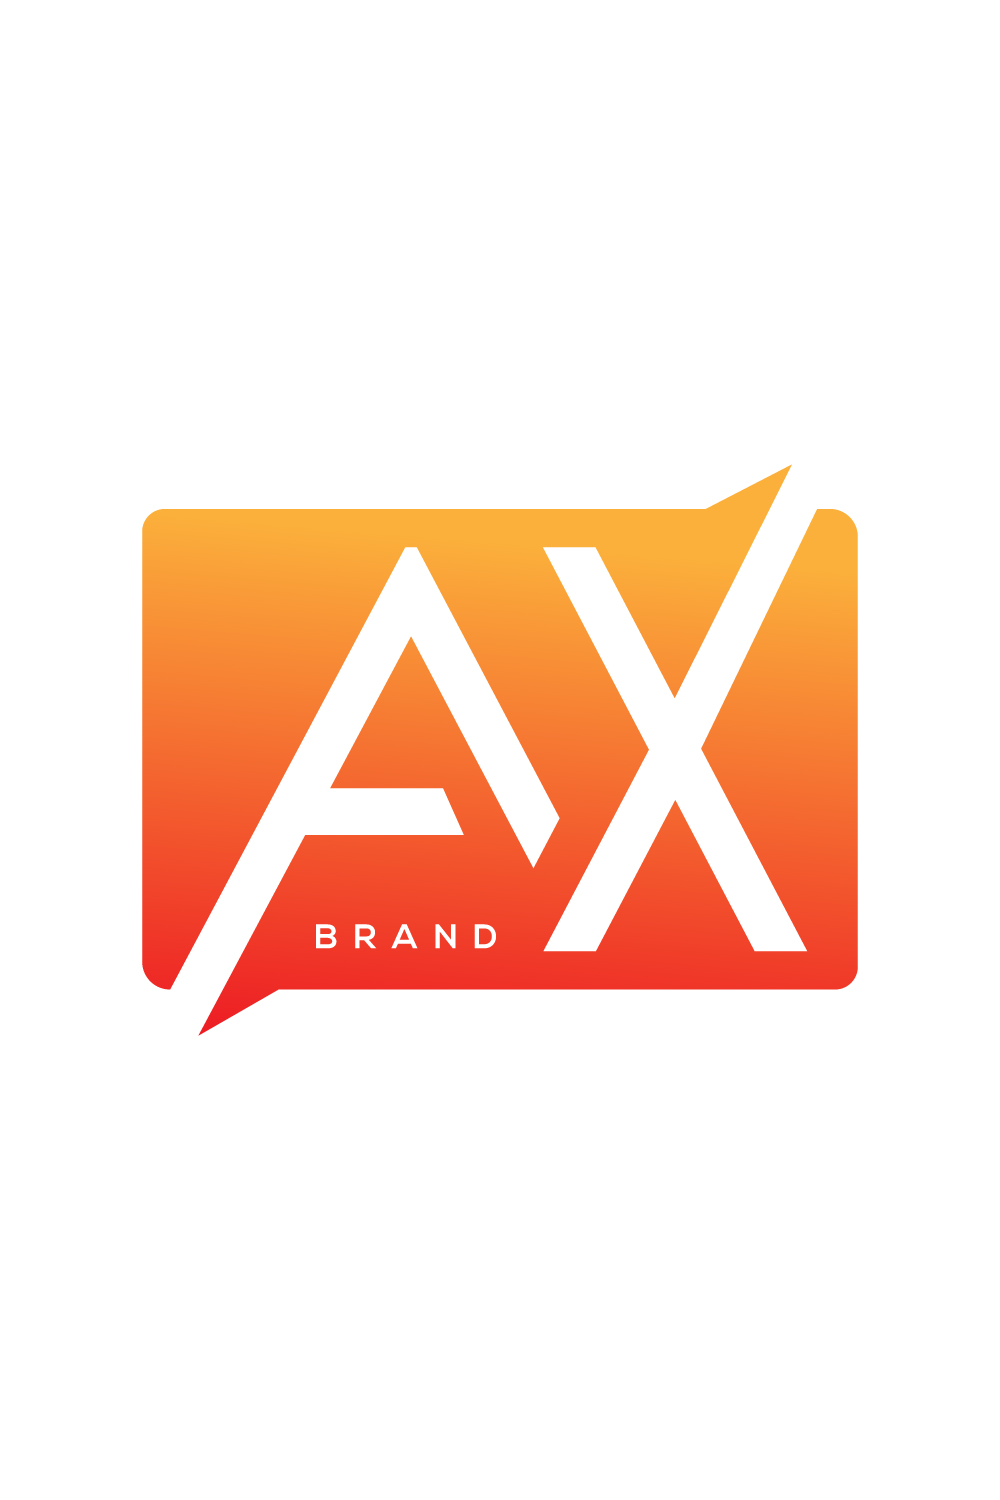 AX Logo design pinterest preview image.